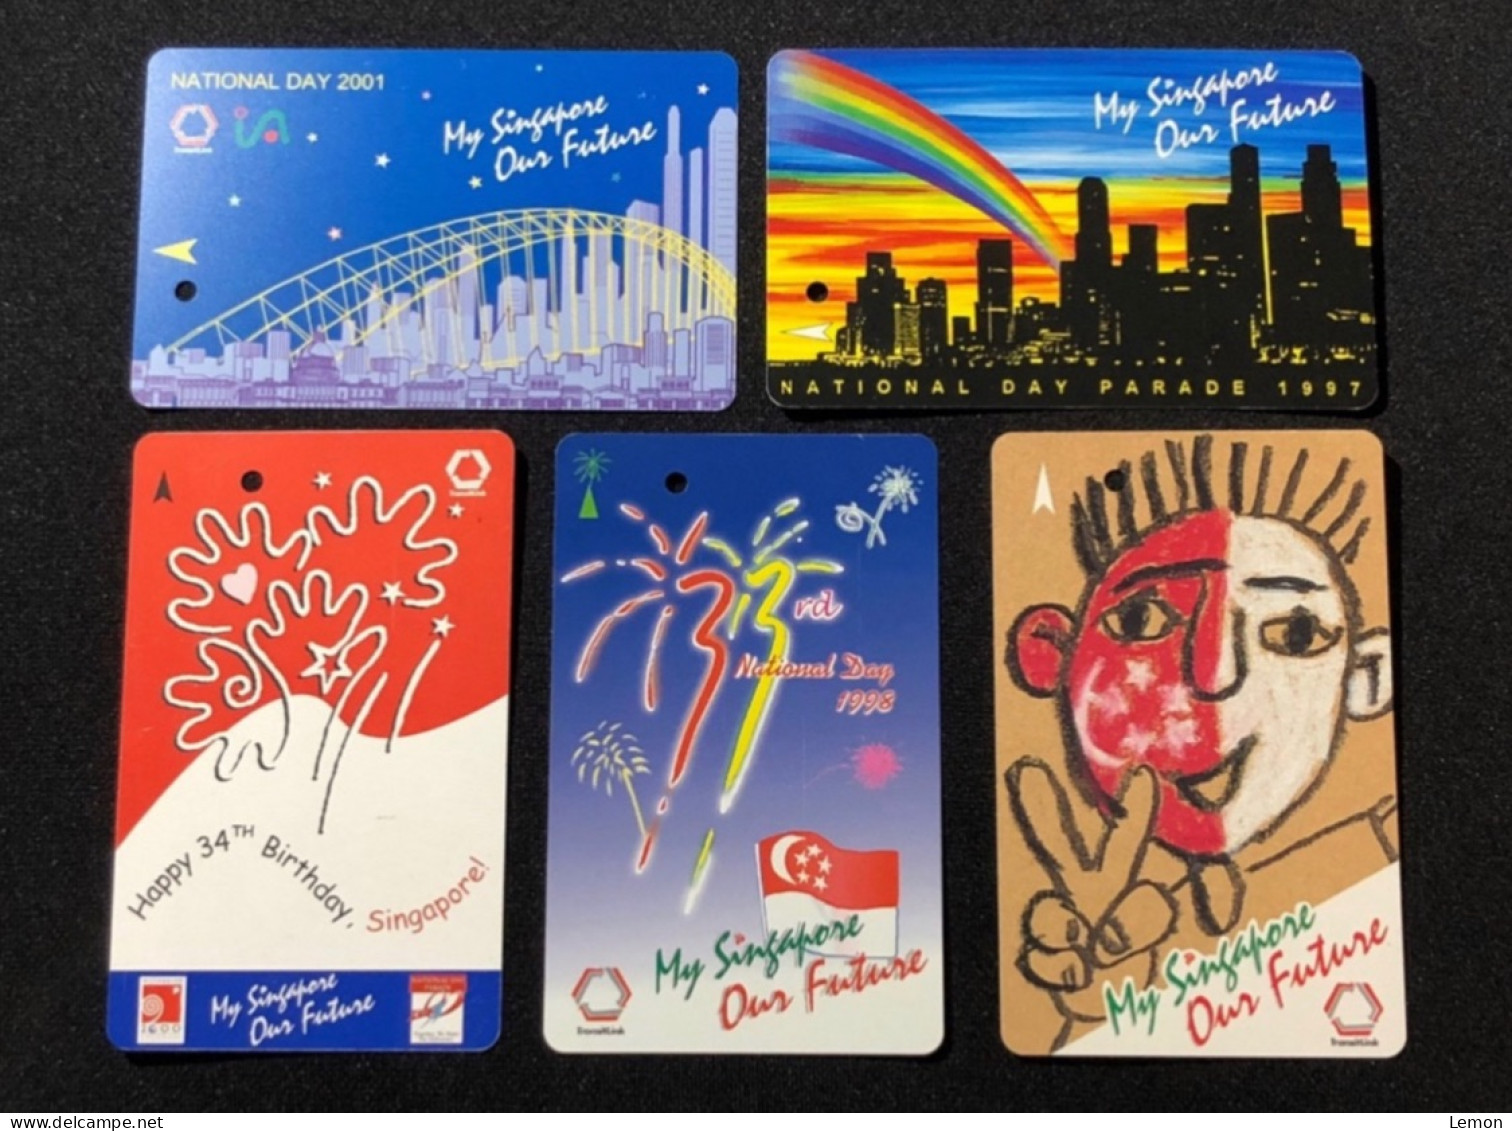 Singapore SMRT TransitLink Metro Train Subway Ticket Card, My Singapore Our Future, Set Of 5 Used Cards - Singapore